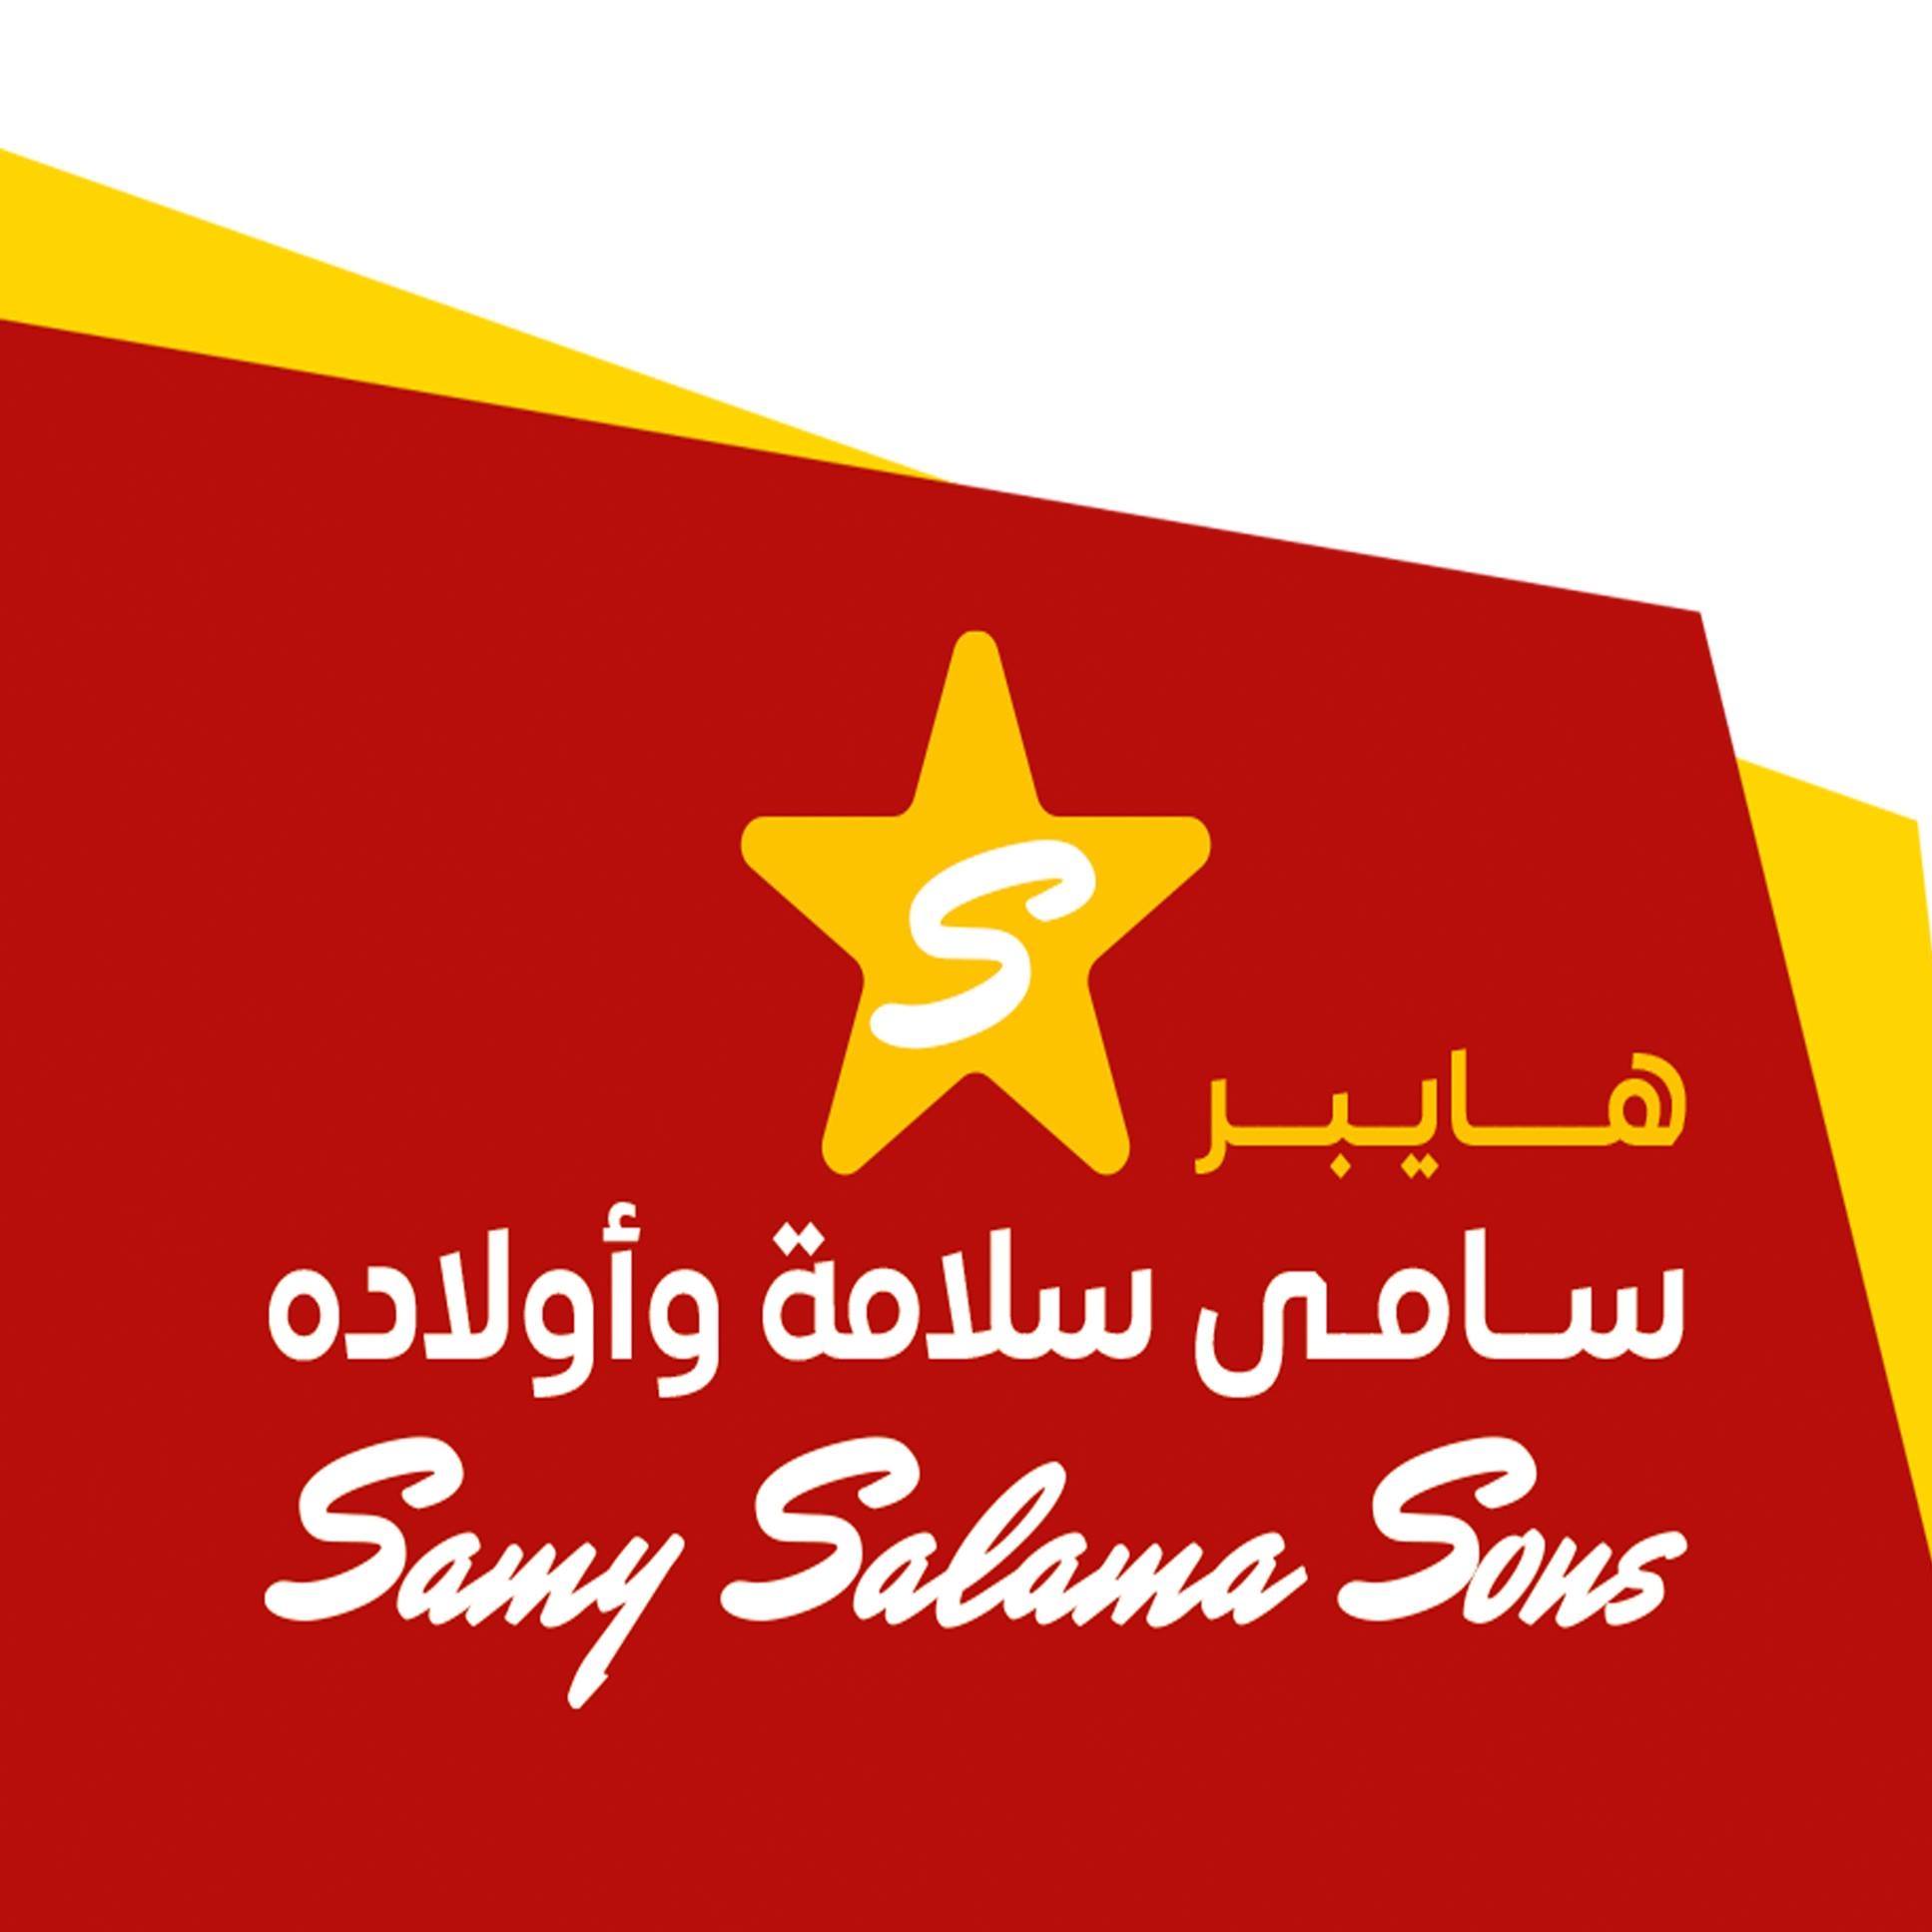 Samy Salama Sons